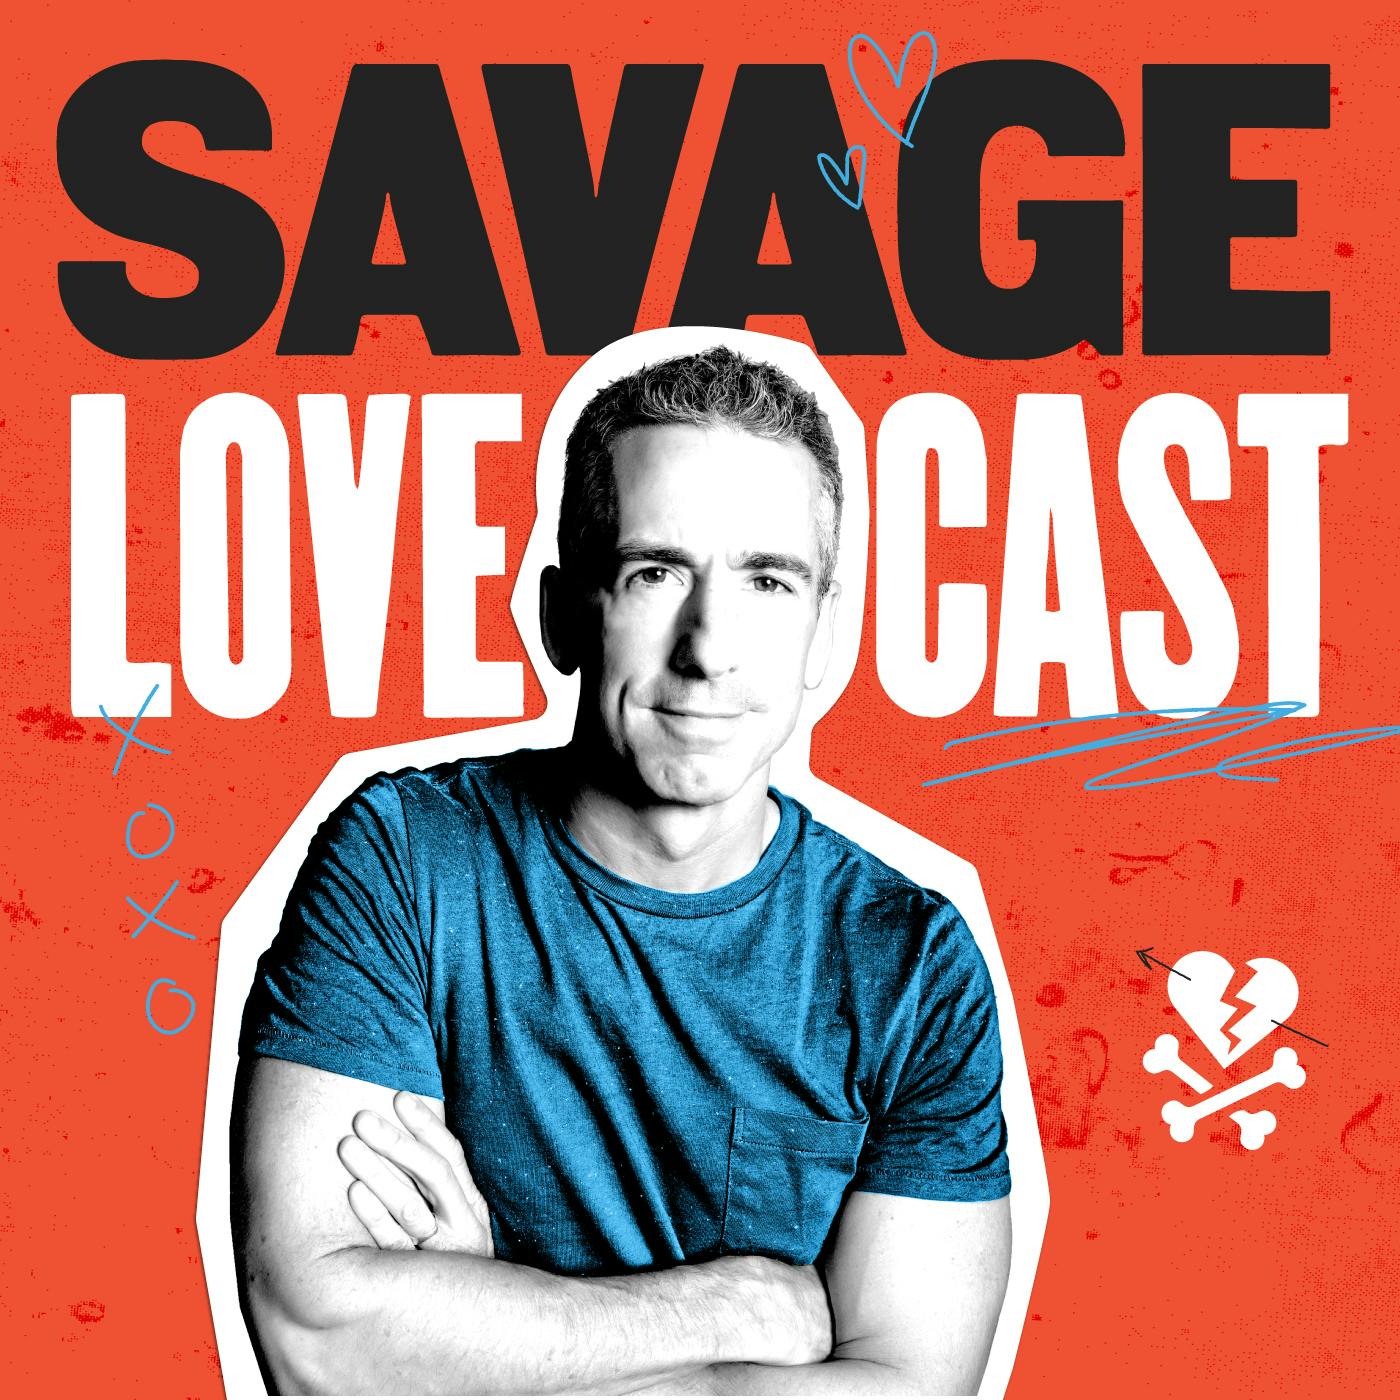 Savage Lovecast Episode 907